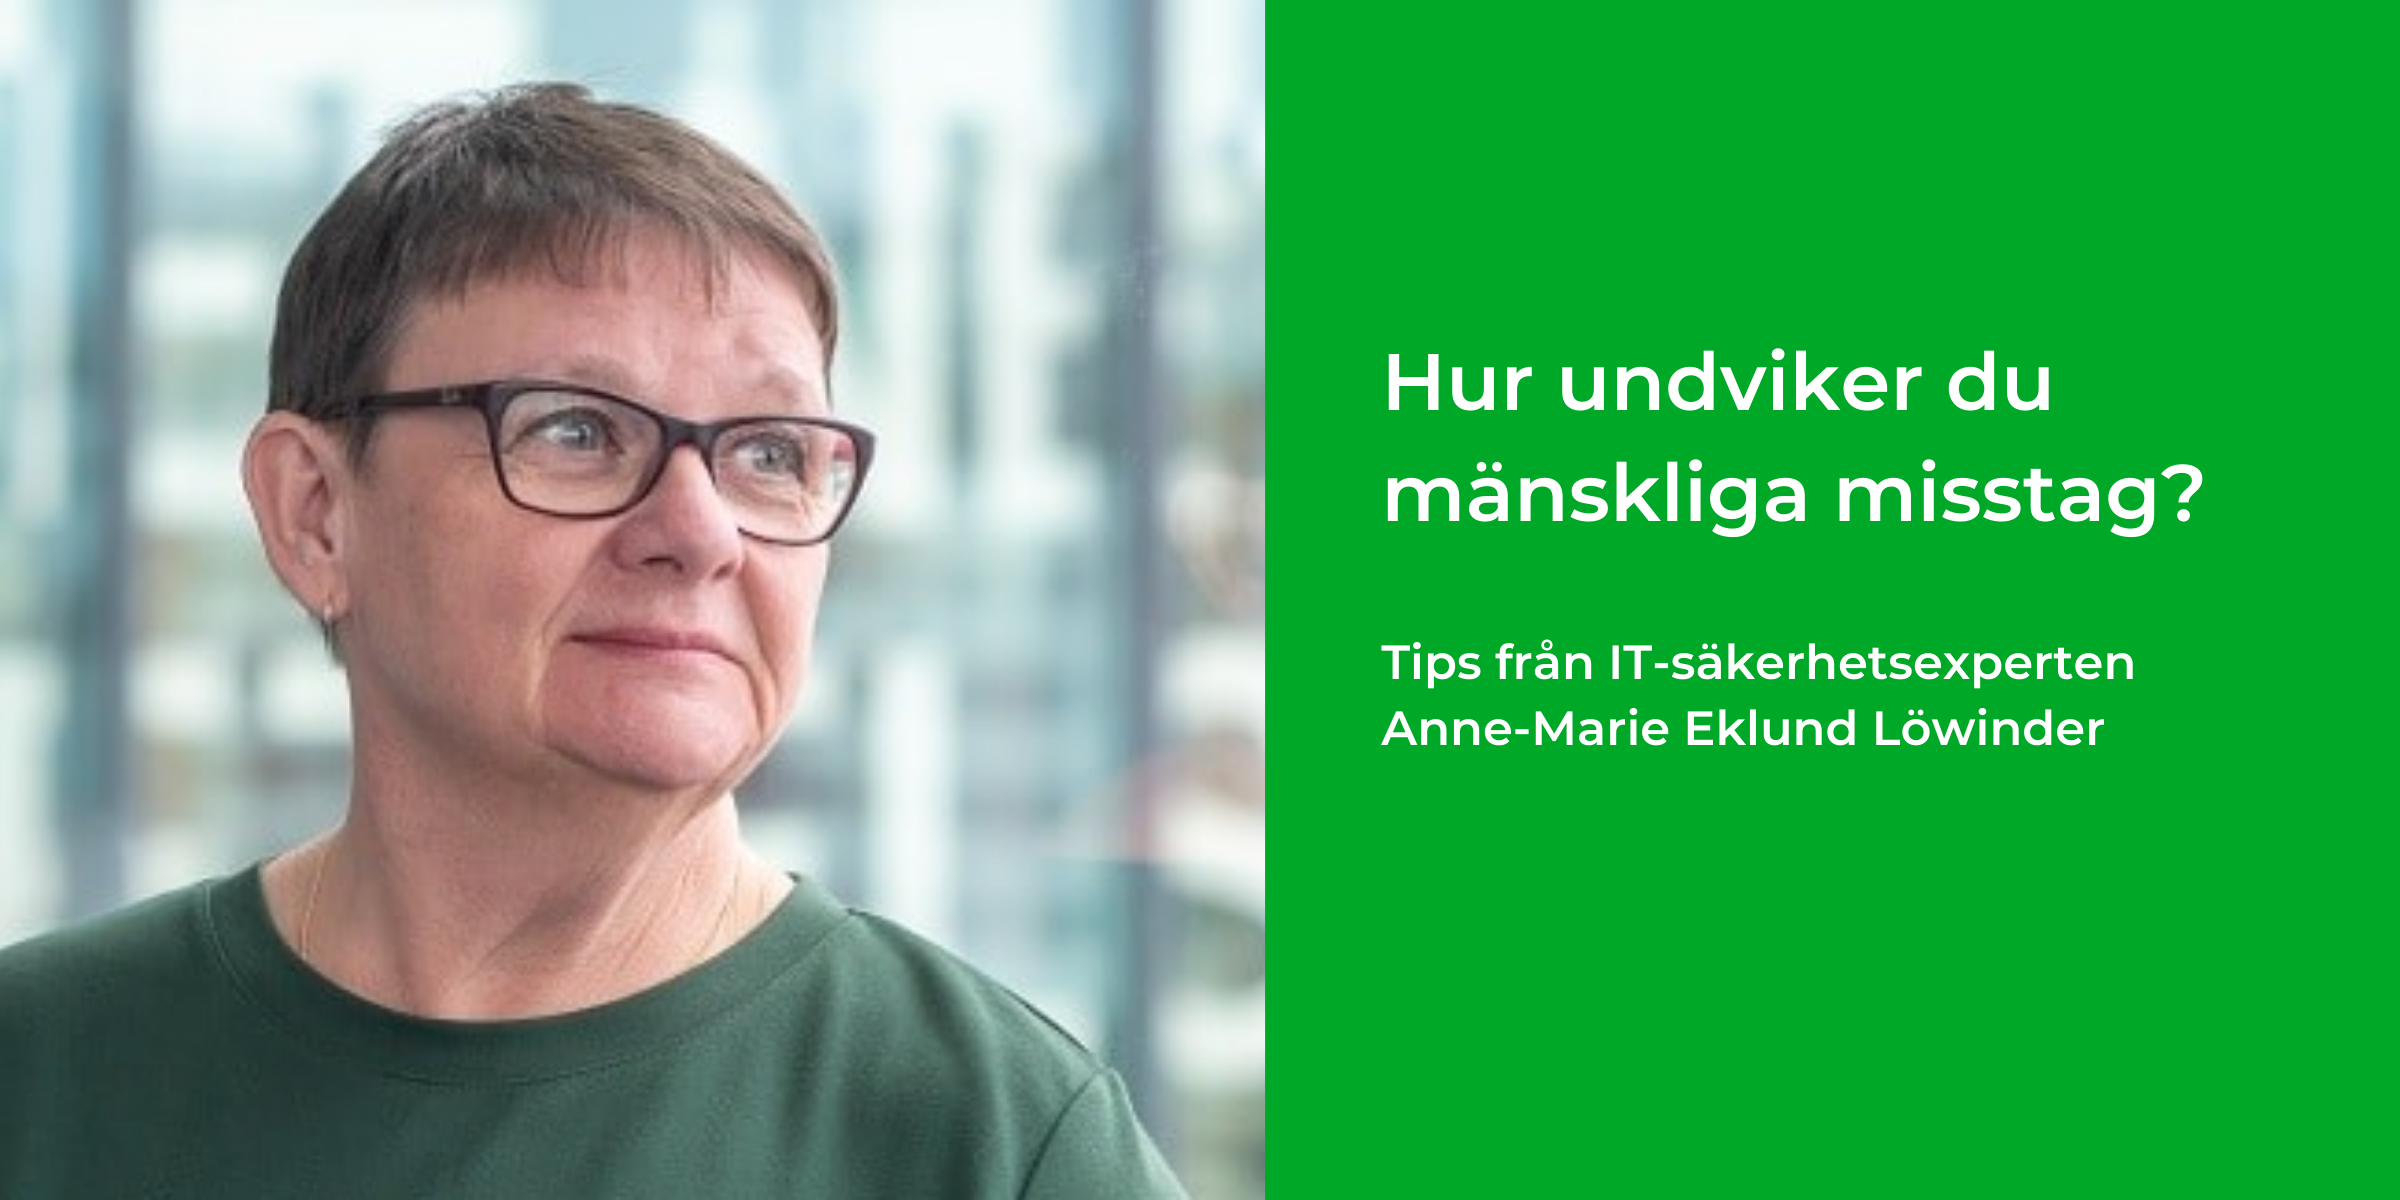 Anne-Marie Eklund Löwinder: Hur förhindrar vi mänskliga misstag?